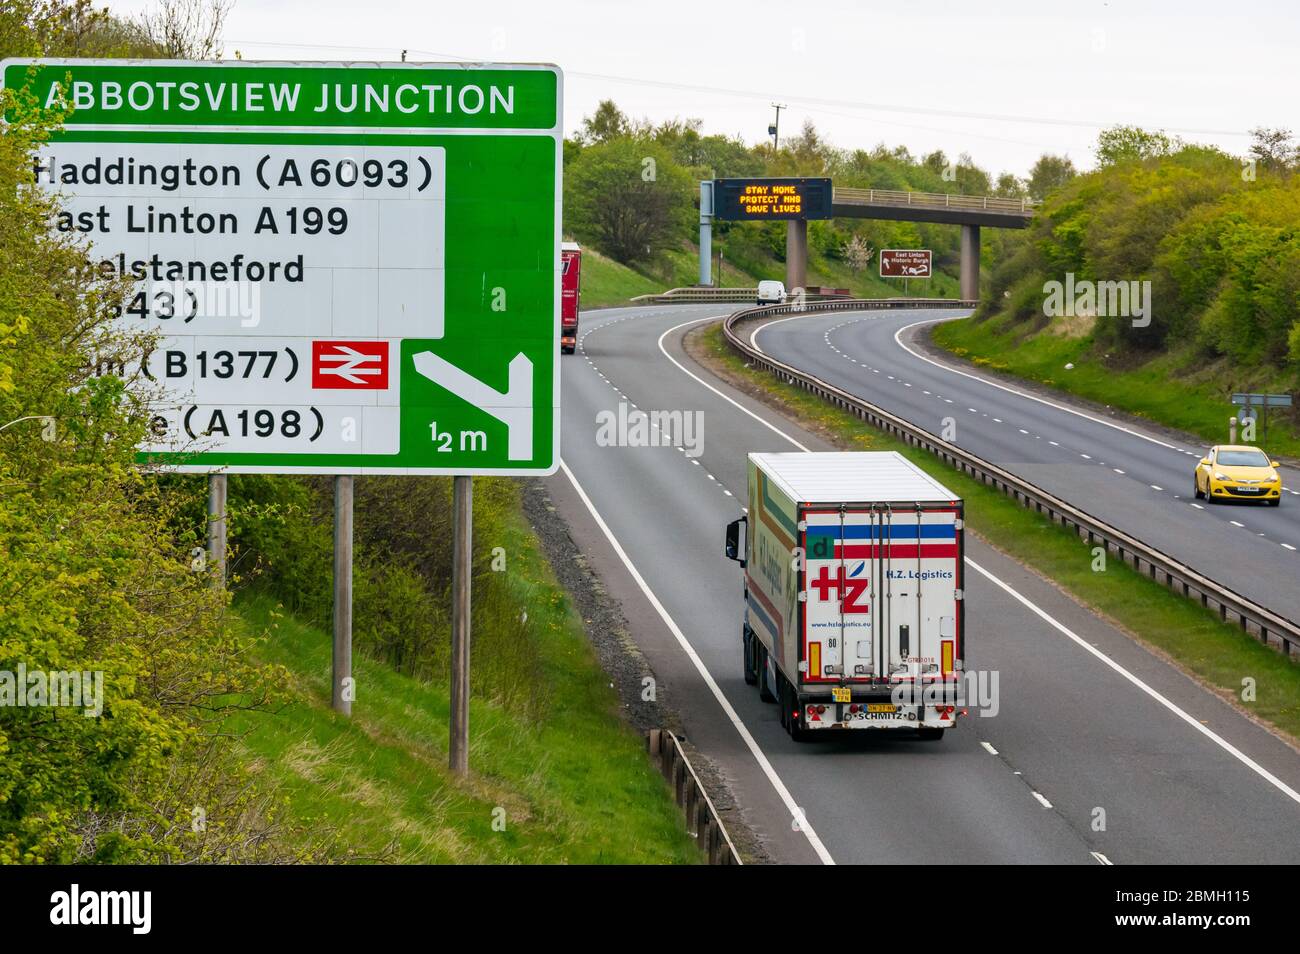 Traffic with Dutch lorry on A1 during Covid-19 Coronavirus pandemic lockdown near Haddington, East Lothian, Scotland, UK Stock Photo